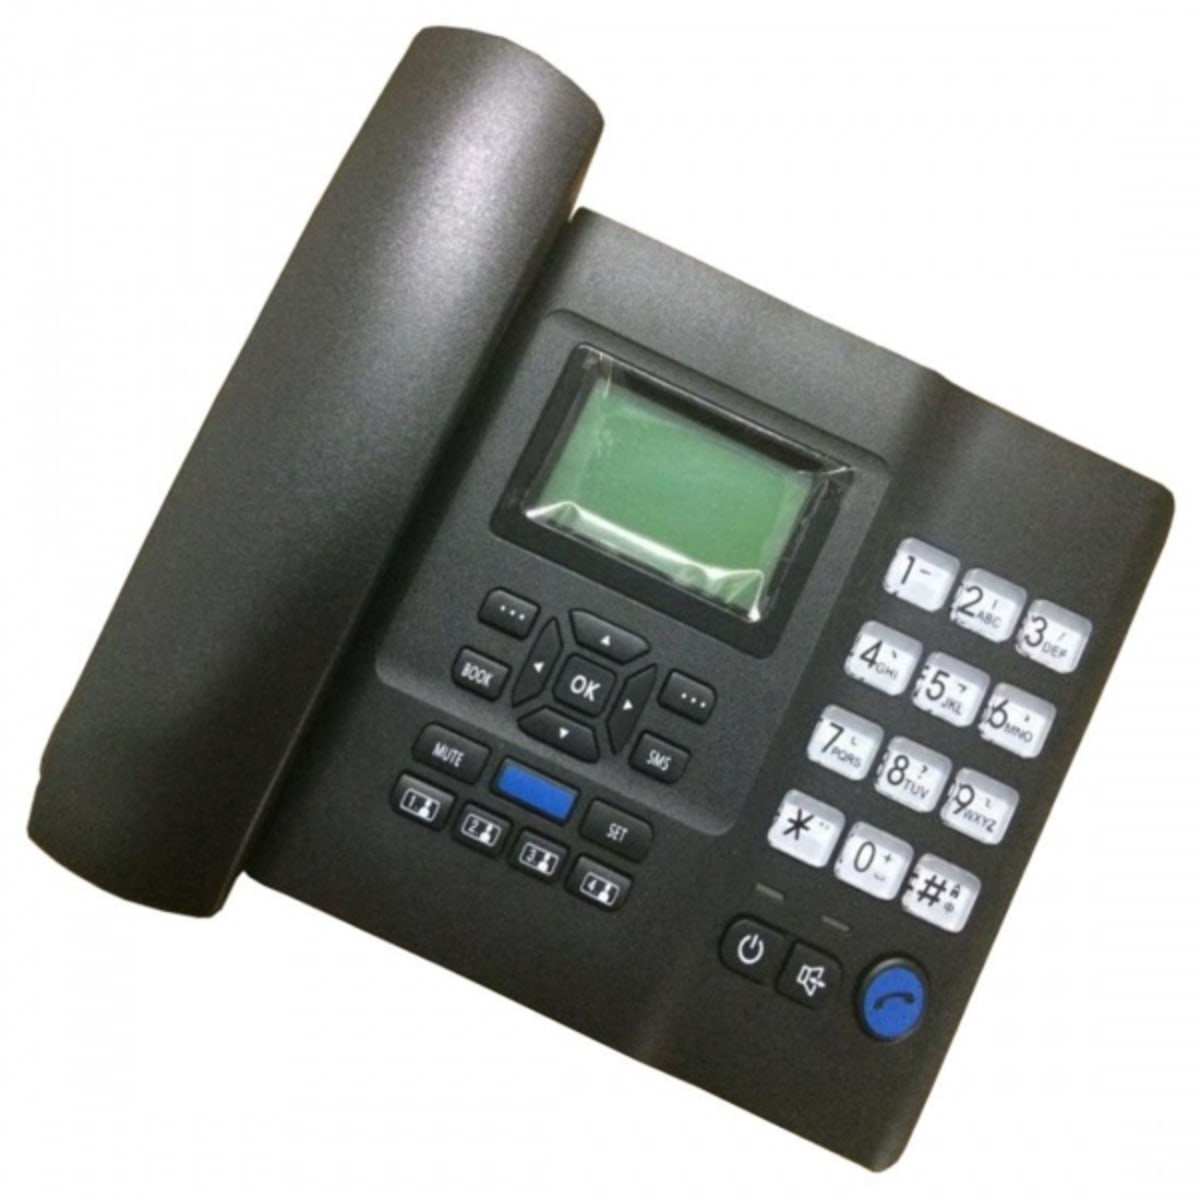 Huawei F501 GSM Desktop Telephone - Black